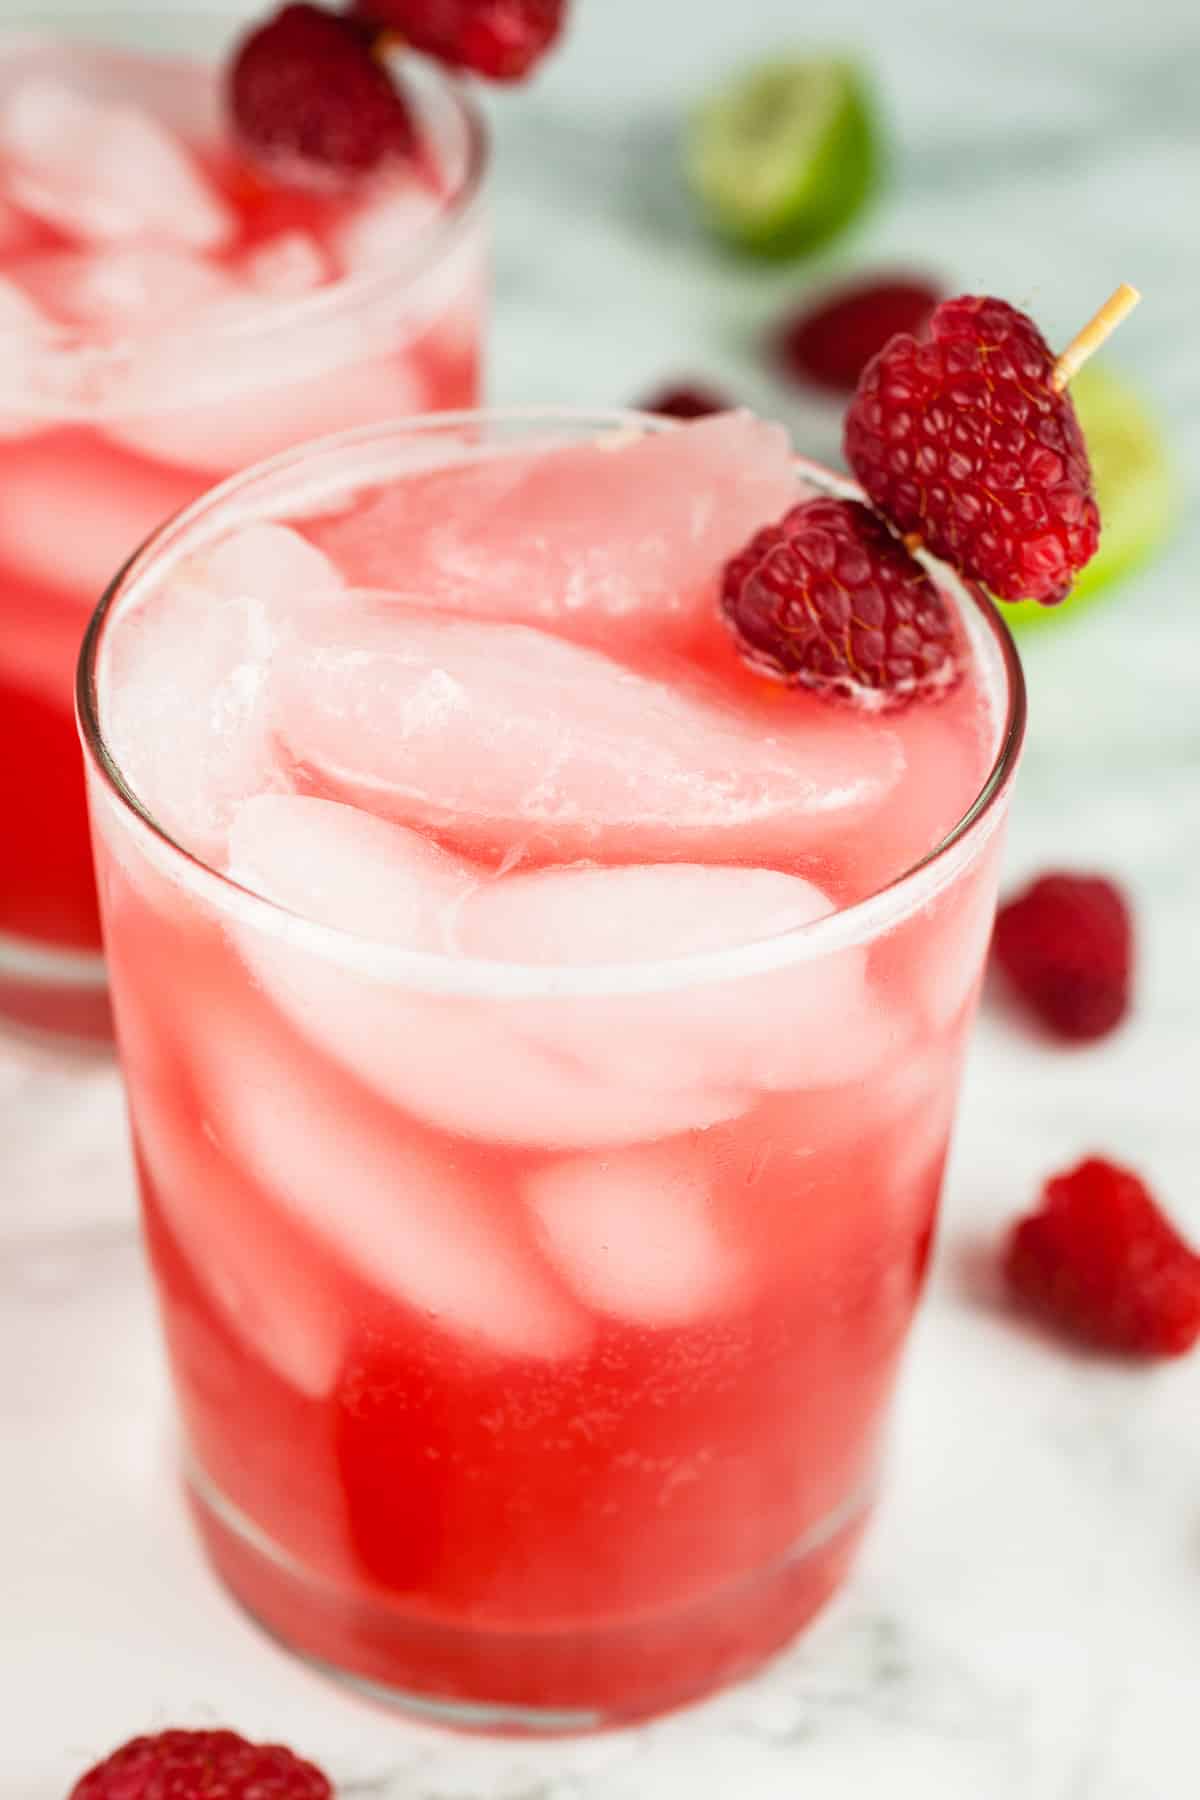 Raspberry Mule with ice and raspberries